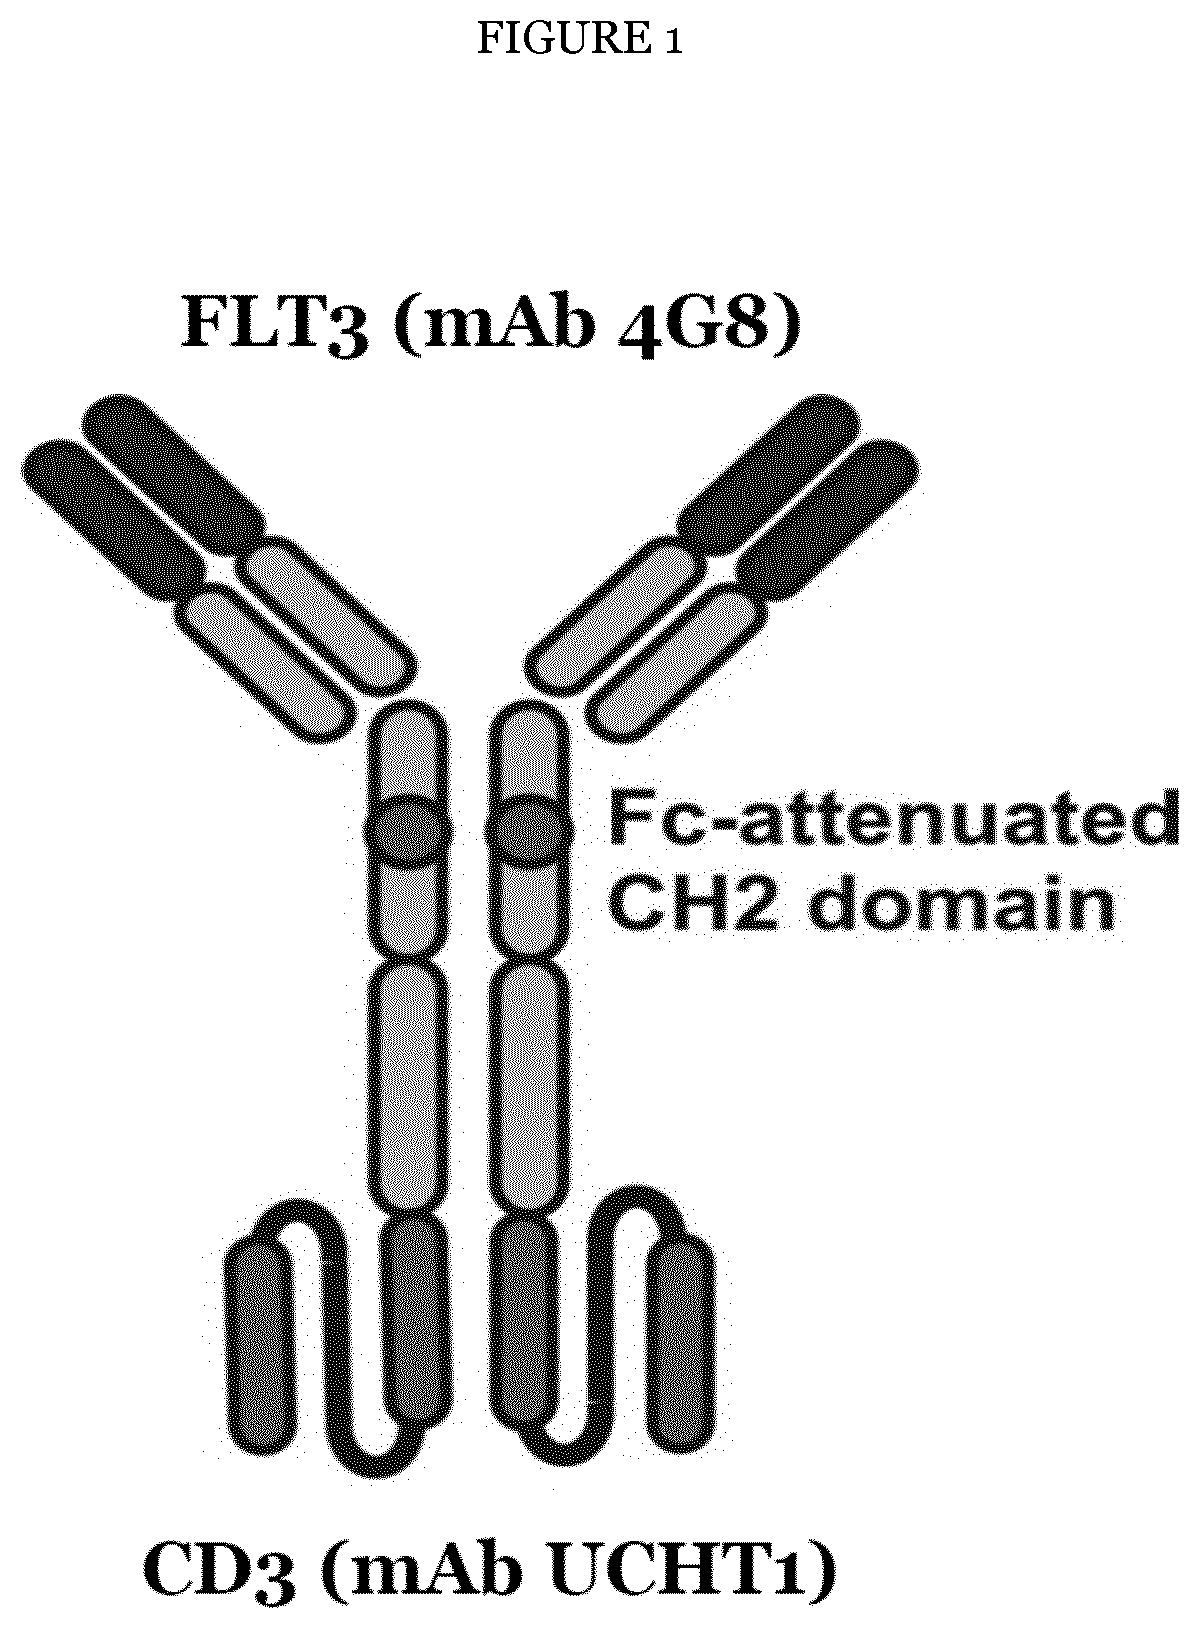 Improved Anti-FLT3 Antigen Binding Proteins